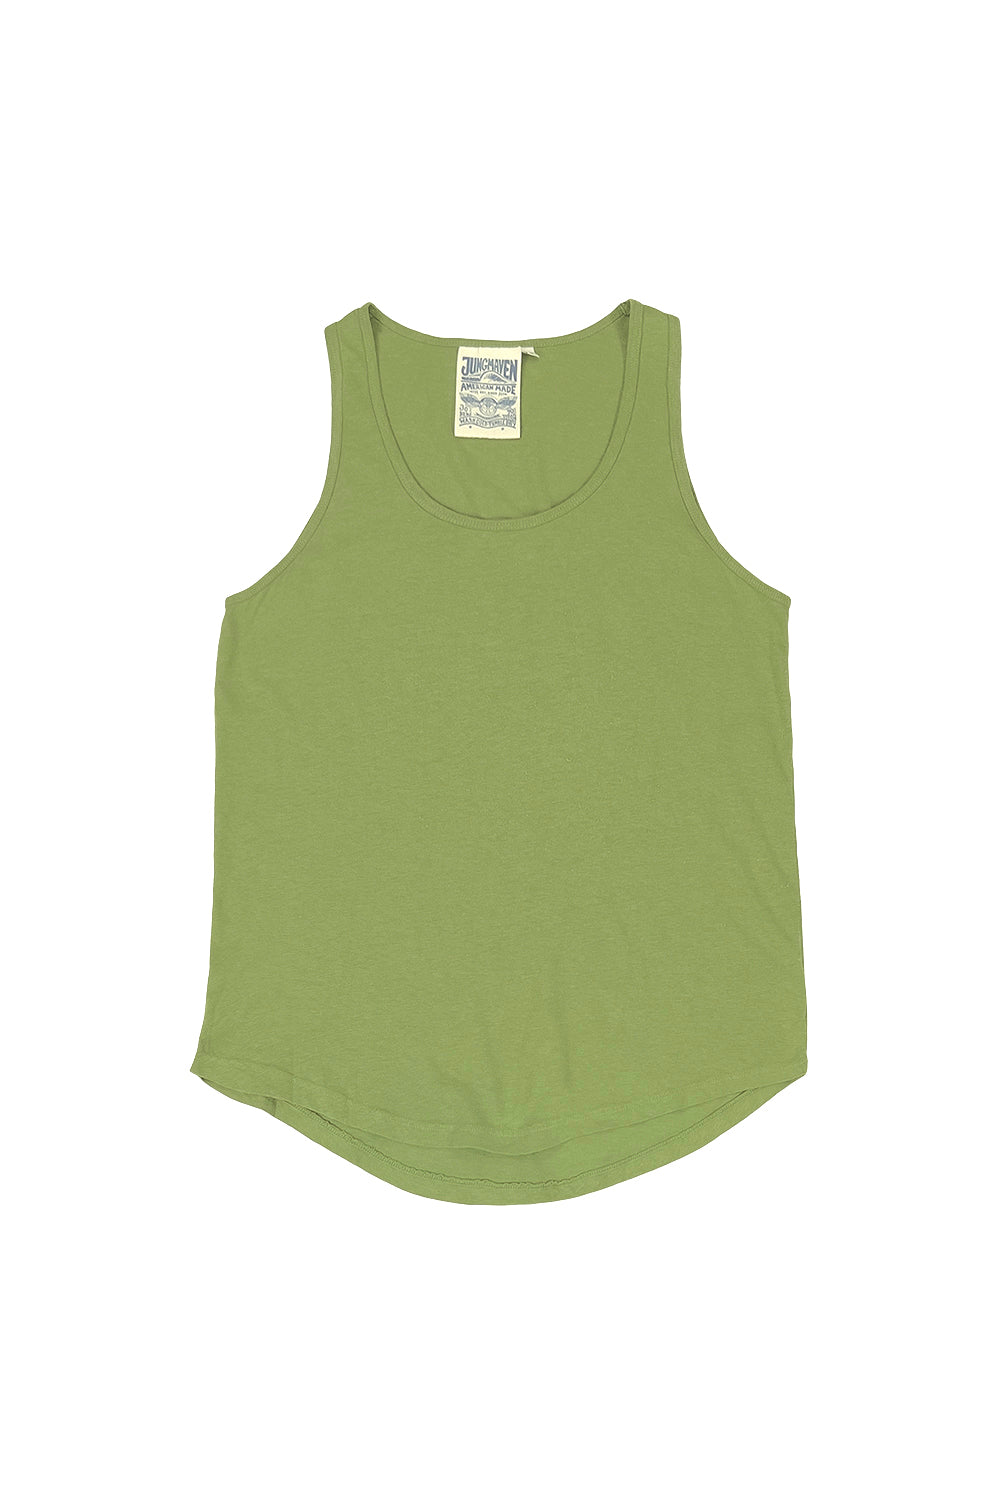 Truro Tank Top | Jungmaven Hemp Clothing & Accessories / Color: Dark Matcha